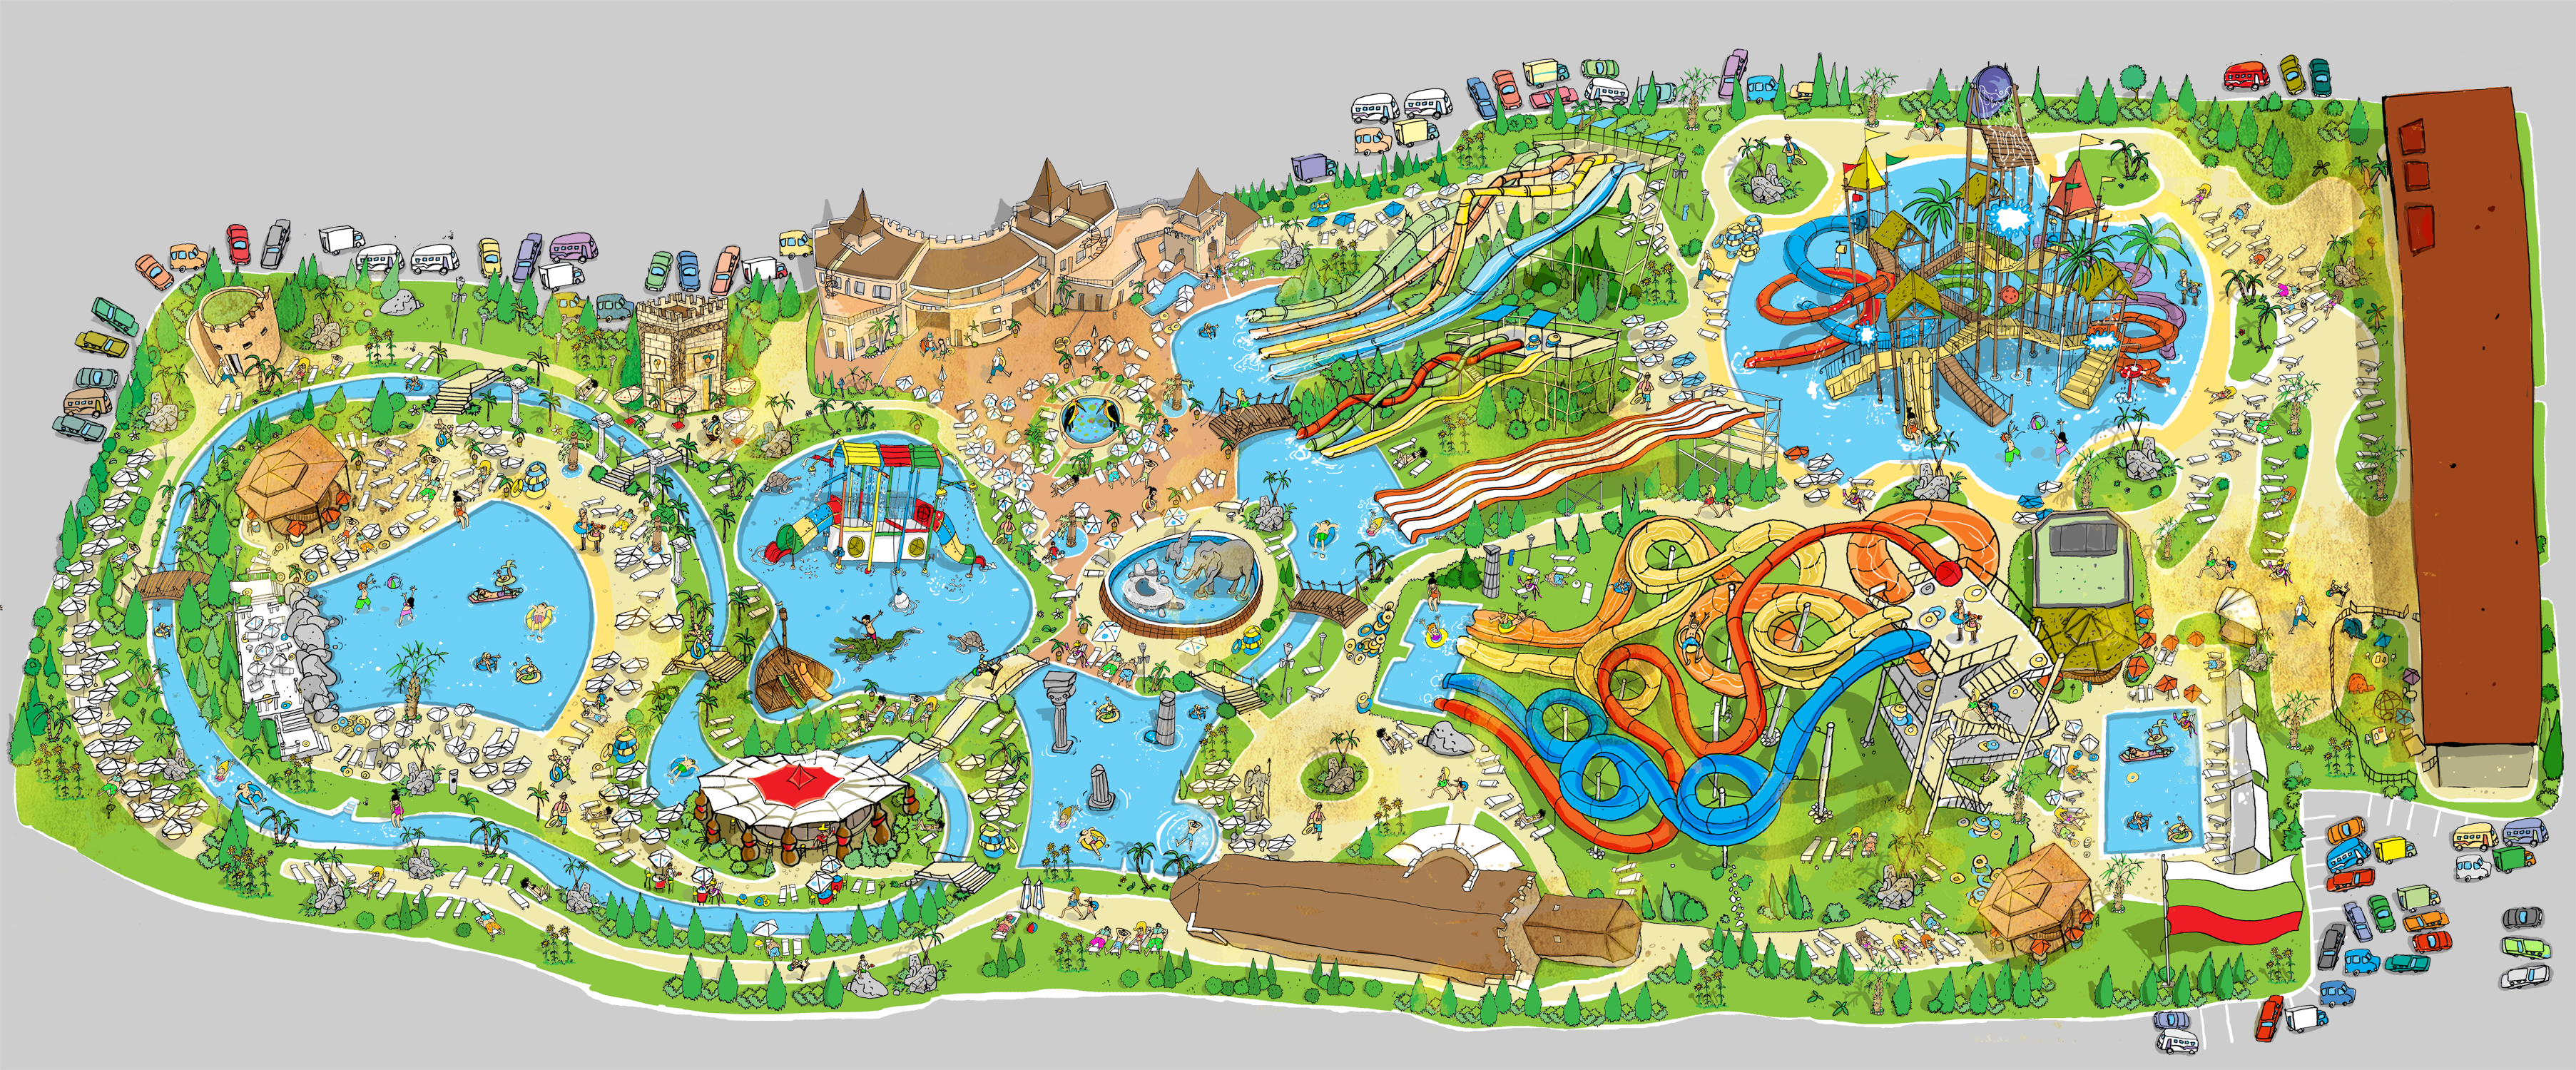 aqua park map by granpasanta on DeviantArt